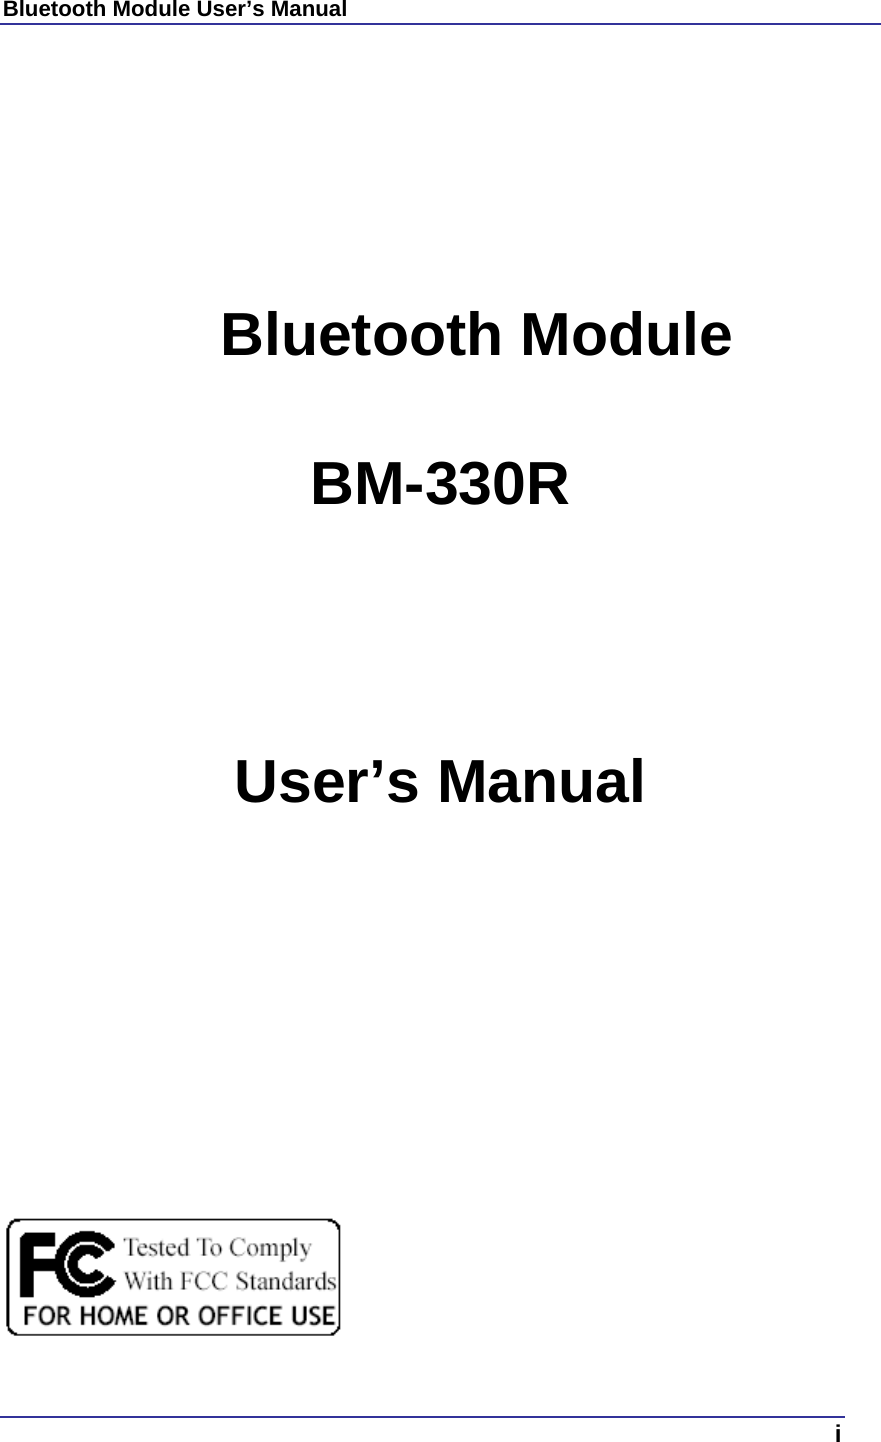 Bluetooth Module User’s Manual  i       Bluetooth Module BM-330R  User’s Manual                         